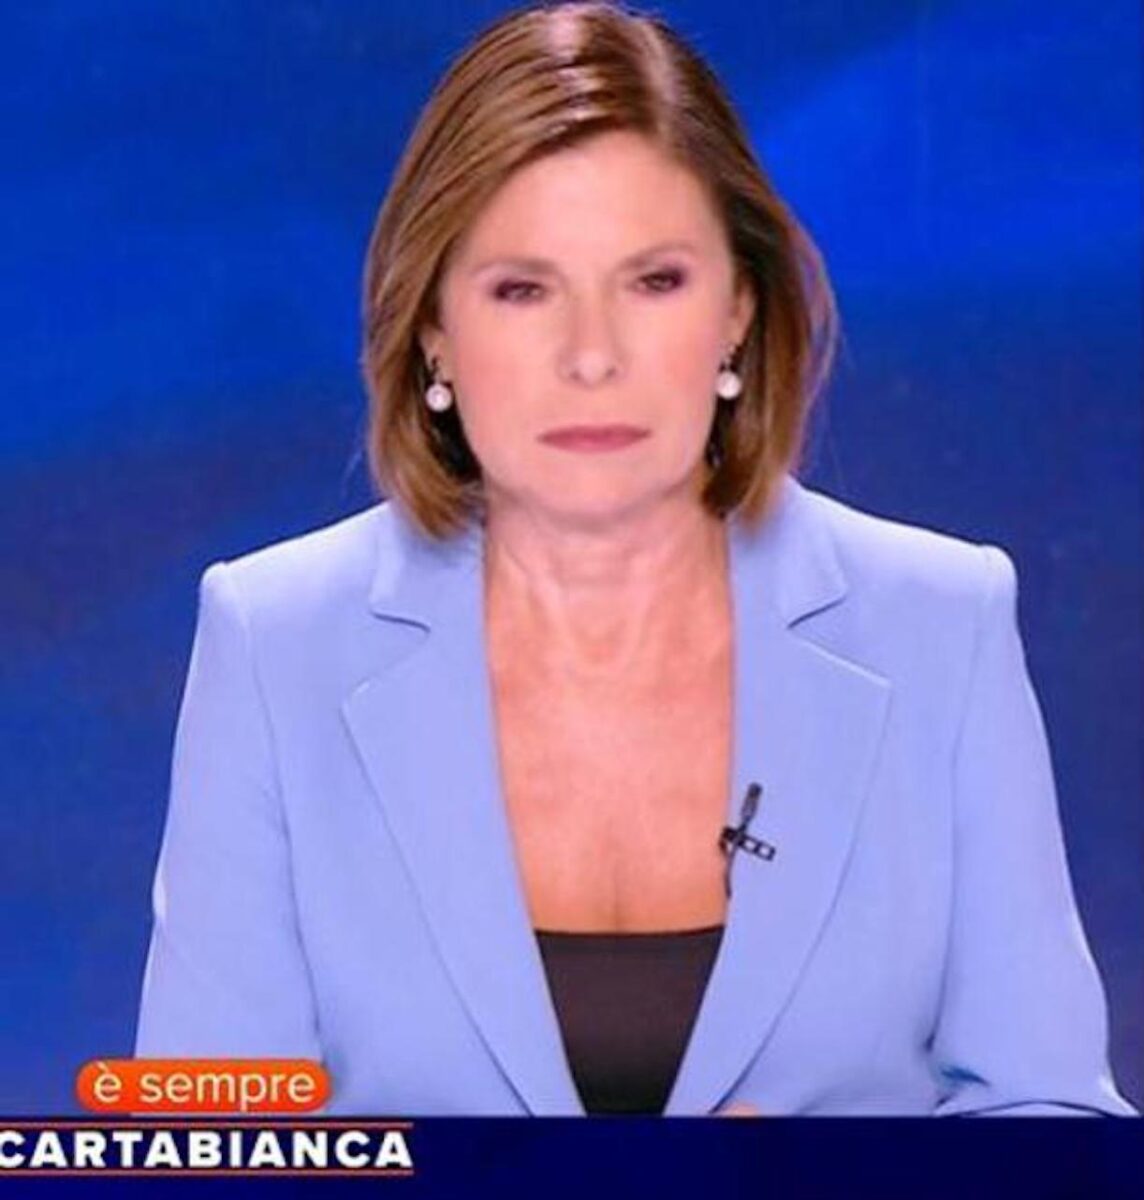 Bianca Berlinguer e Pier Silvio Berlusconi nervi tesi a Mediaset 